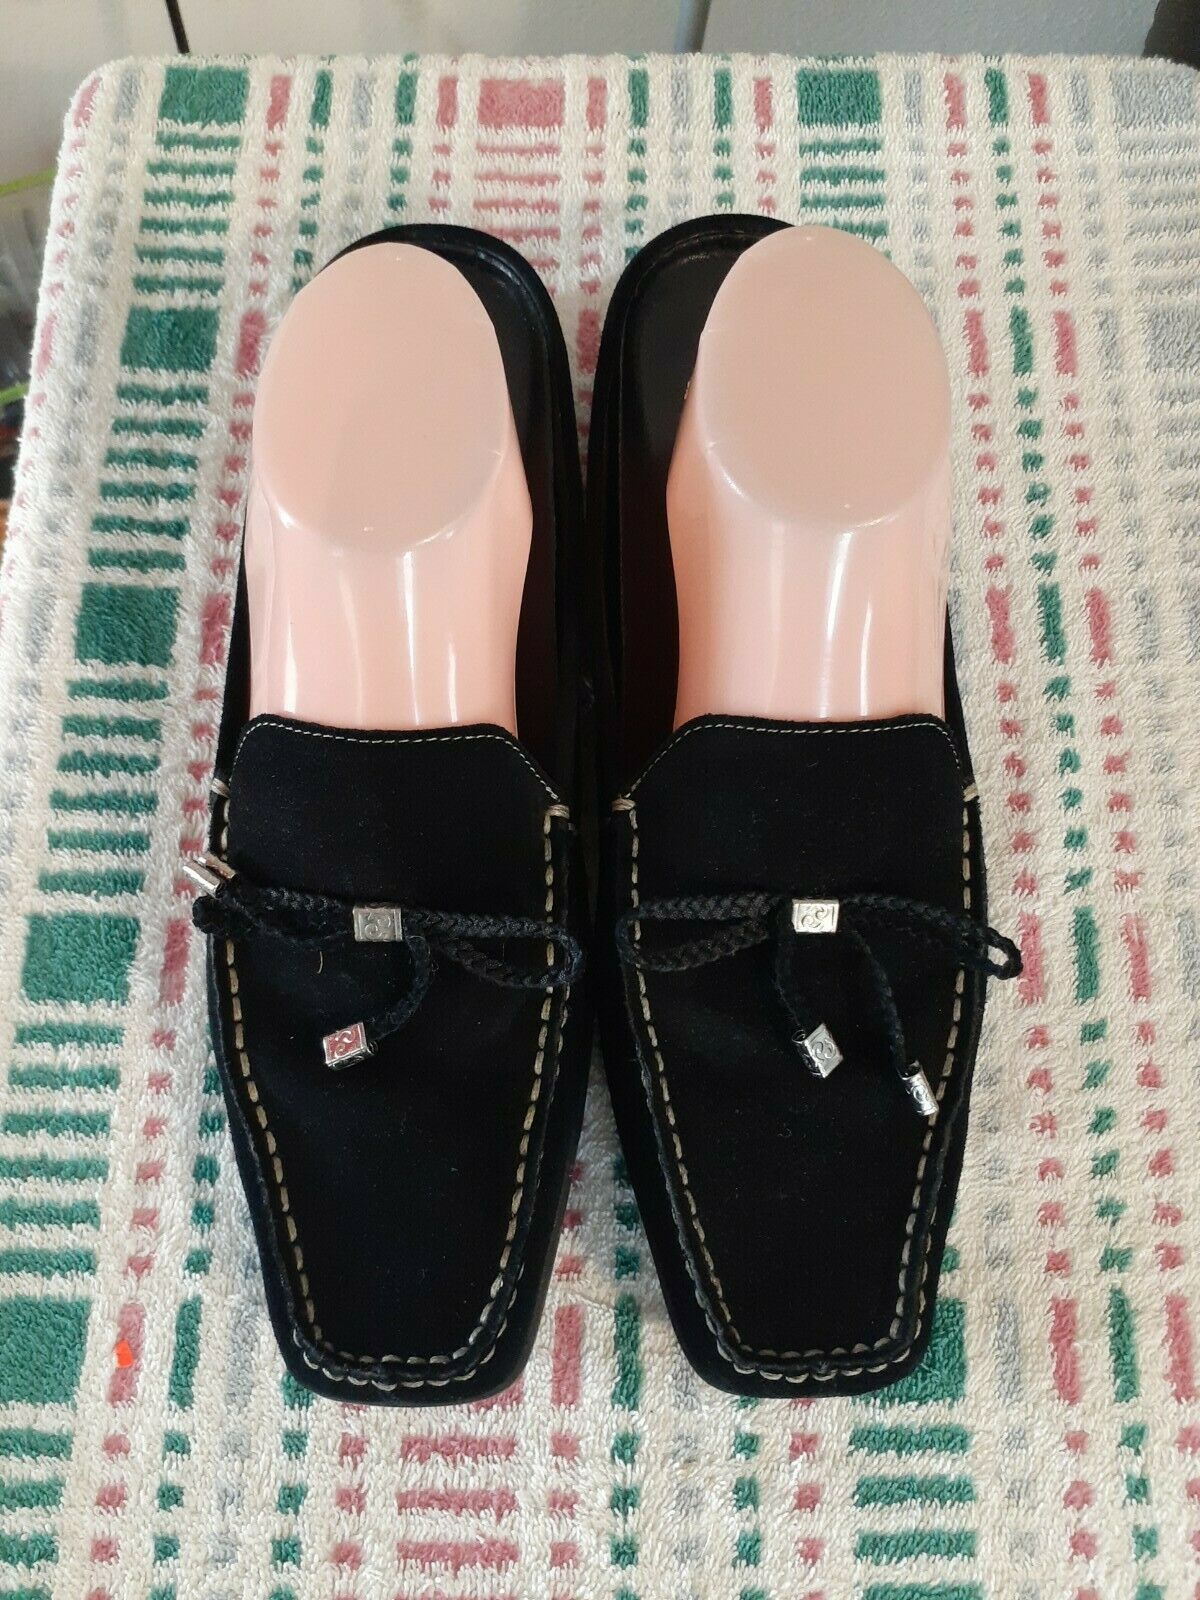 Aerology by Aerosoles Women’s Shoes Black Suede Size 11M Comfort Flat Slides